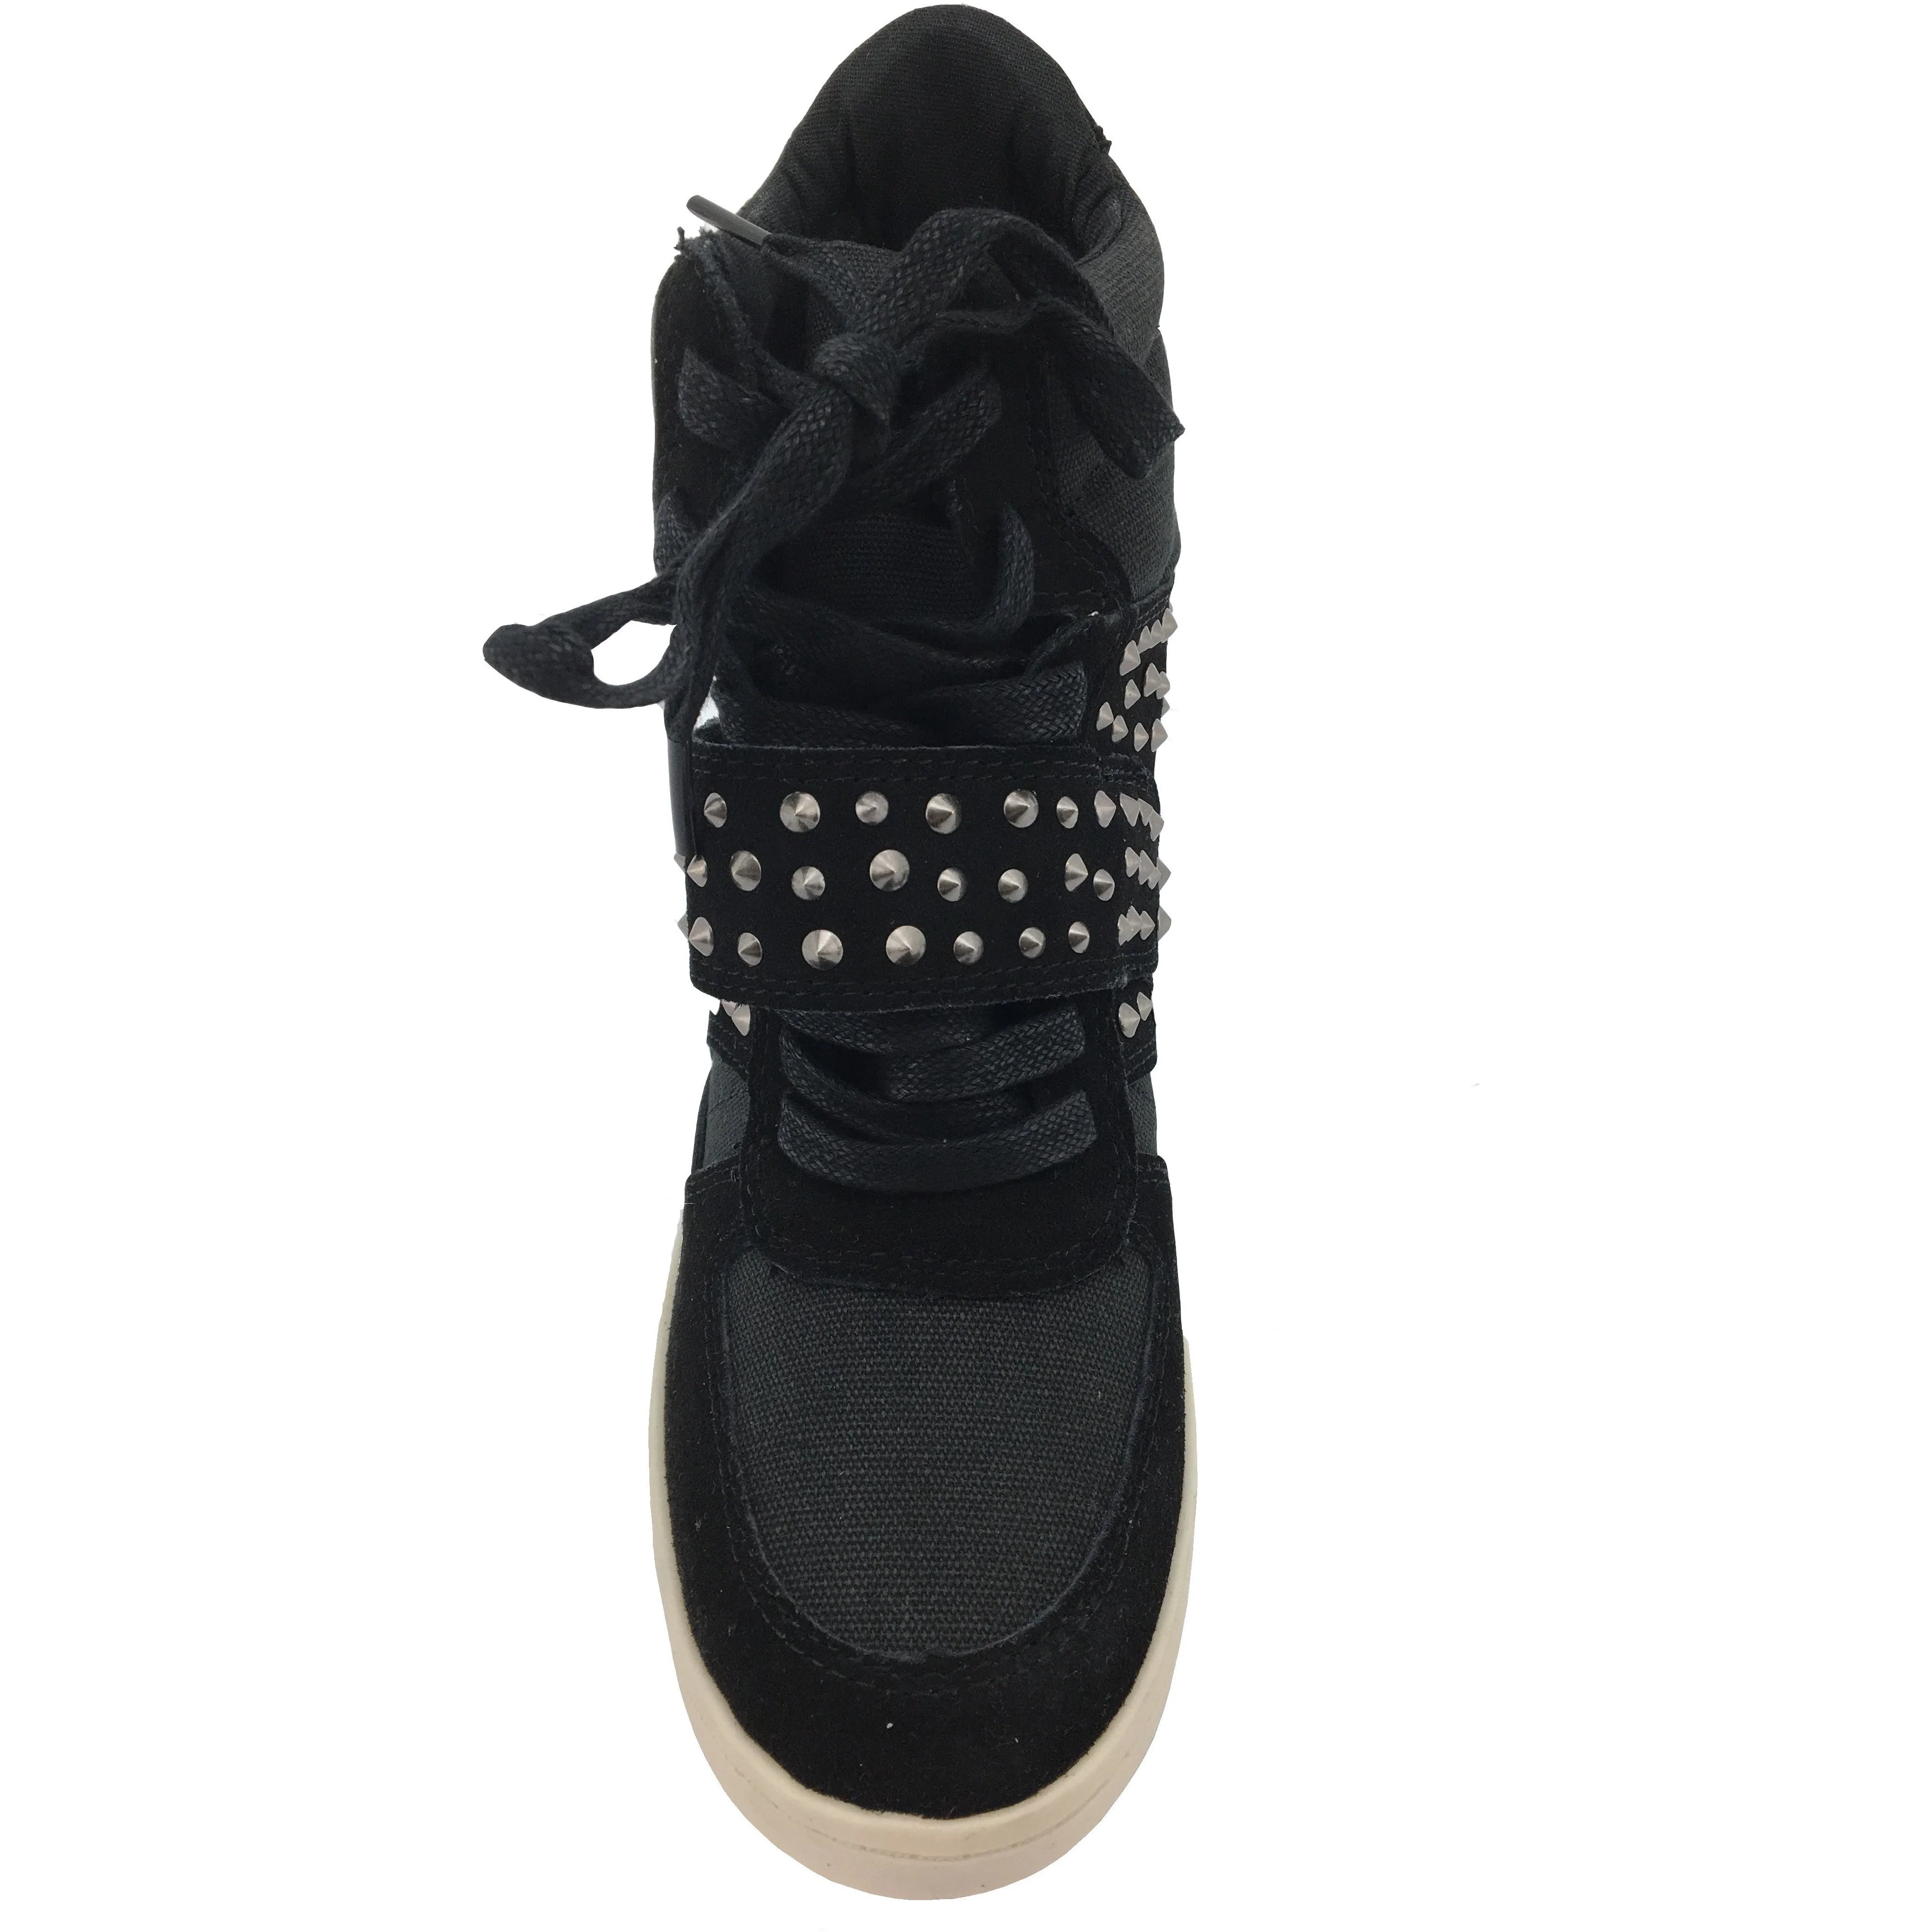 Zigi Soho Women's Studded Wedge Heeled Shoe / Black / Fashion Sneaker